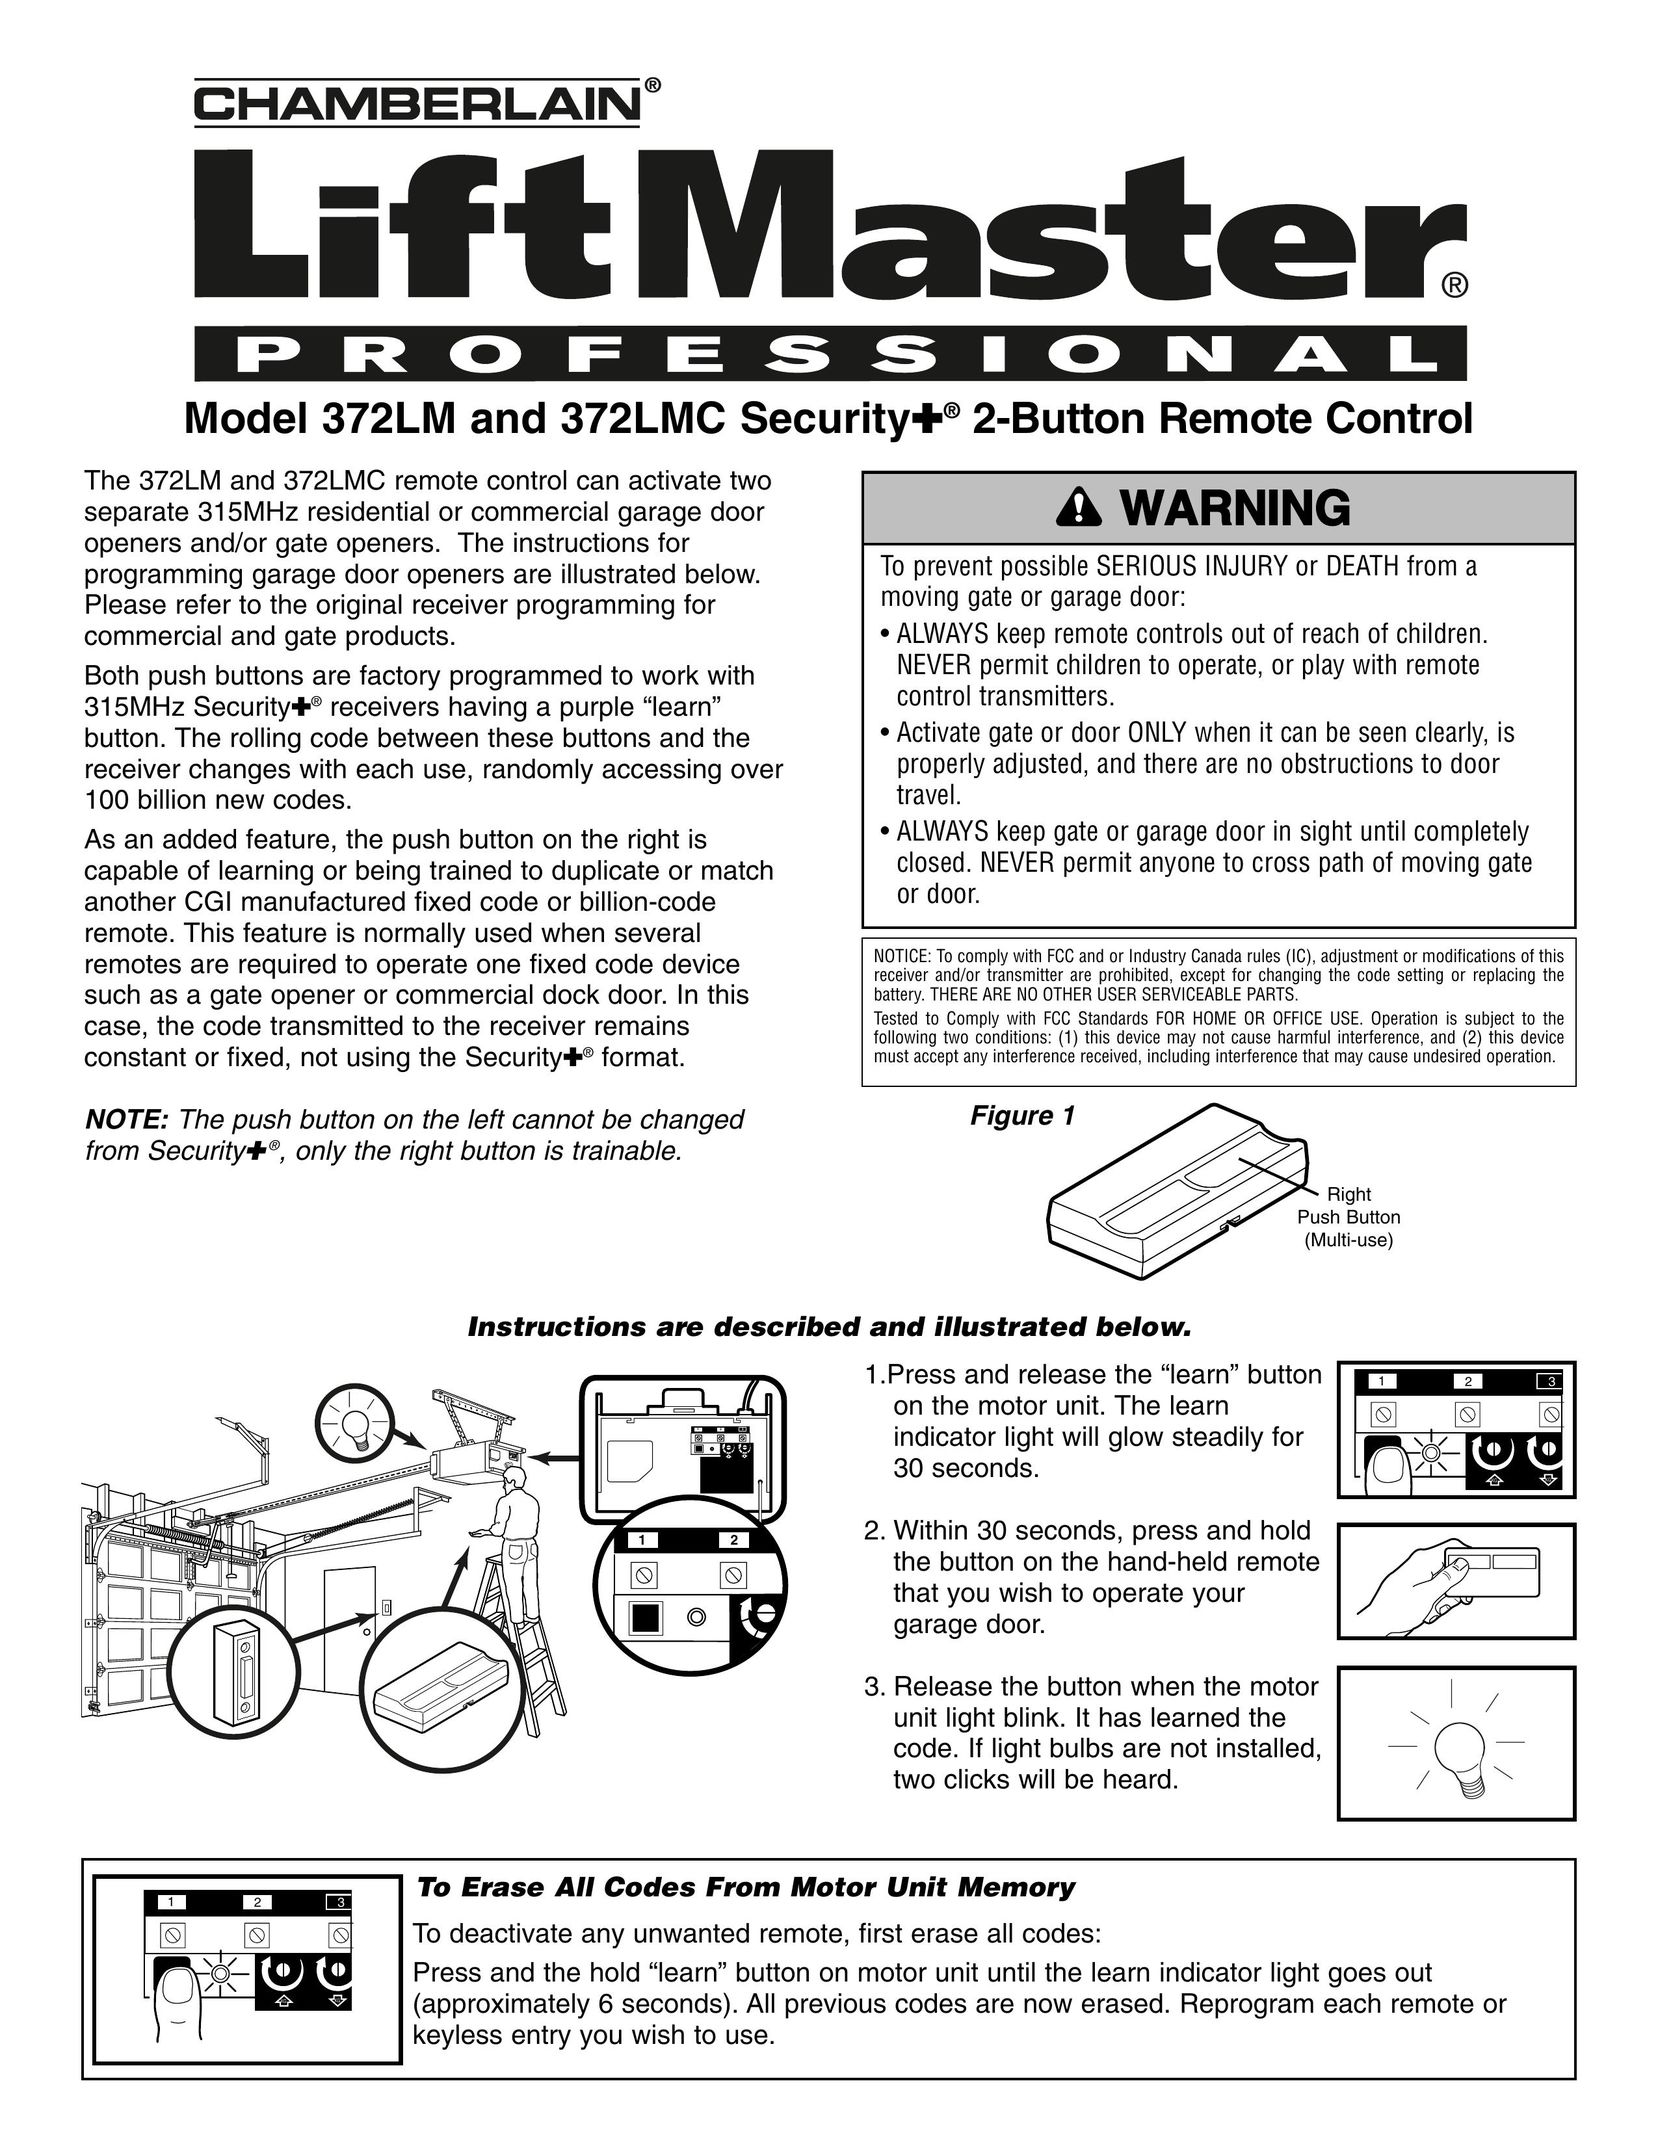 Chamberlain 372LMC Universal Remote User Manual